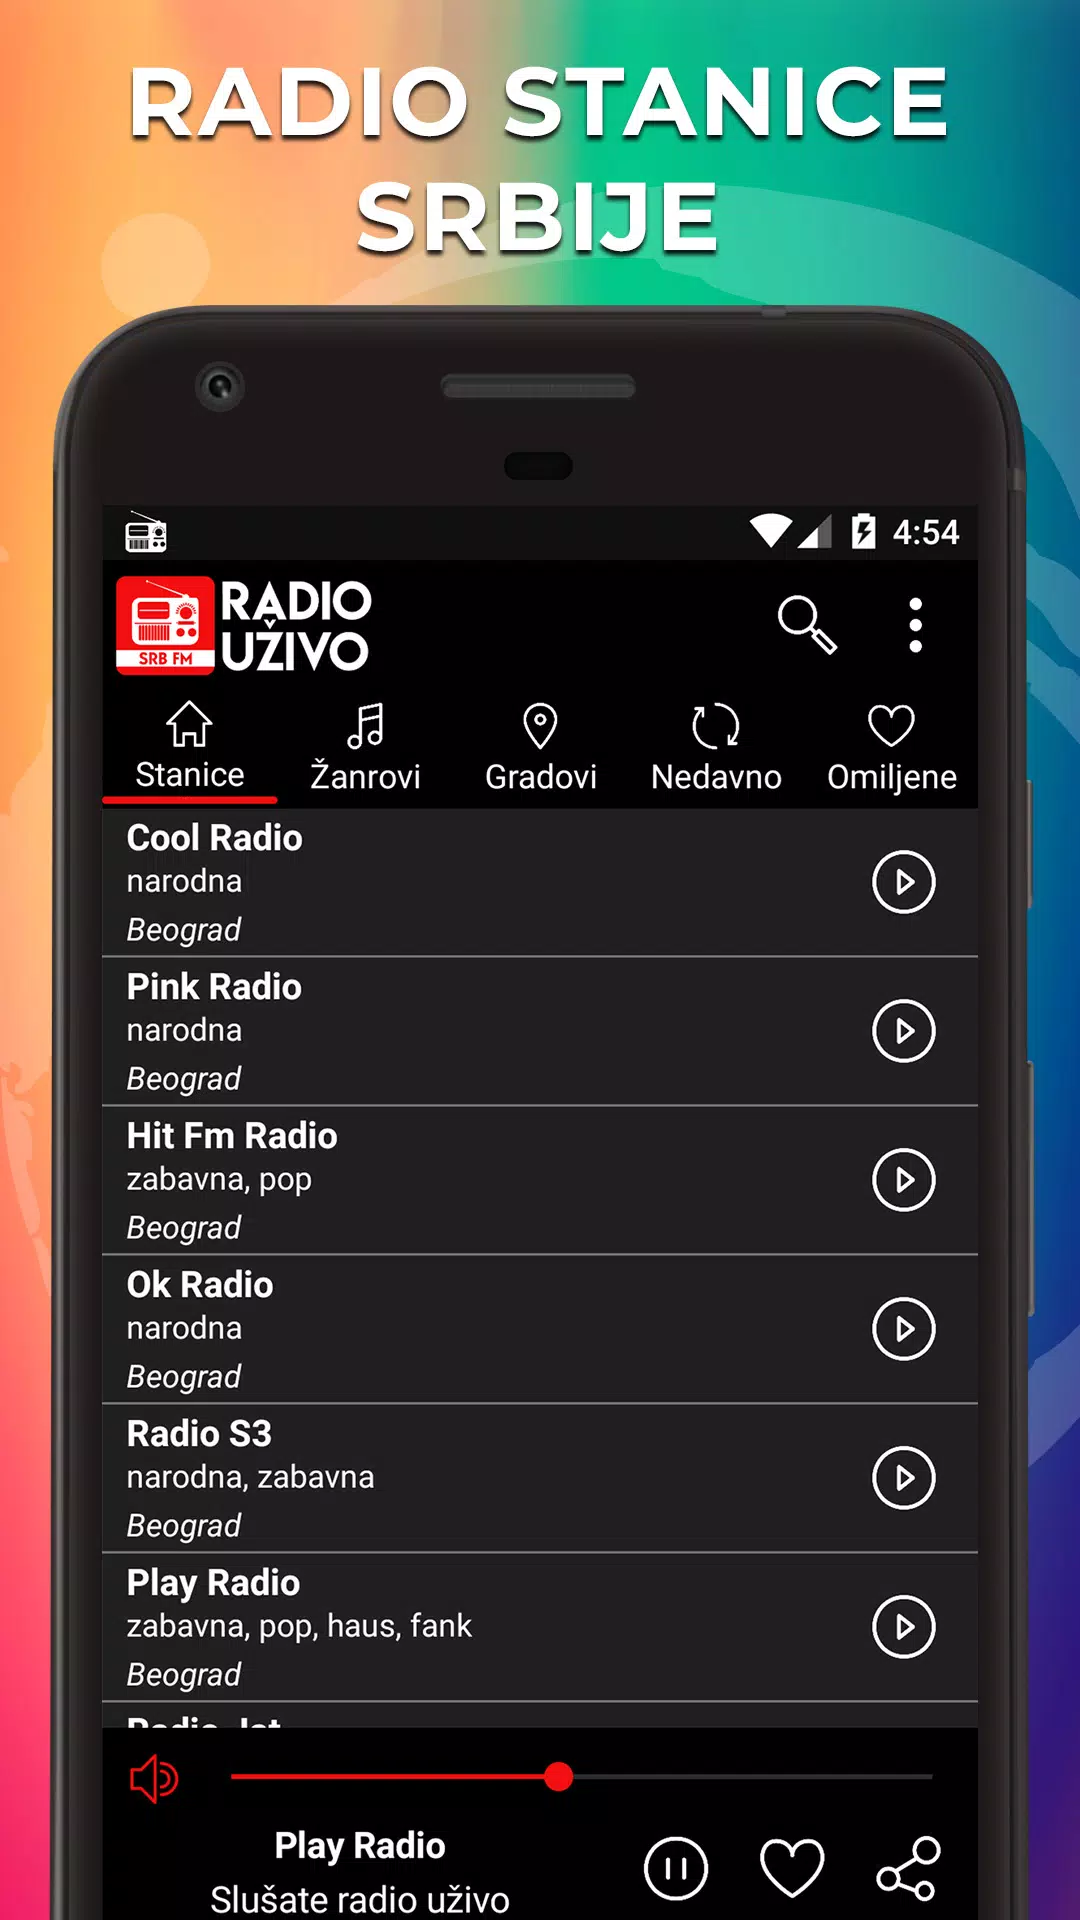 Radio Uživo - Radio Stanice FM APK for Android Download